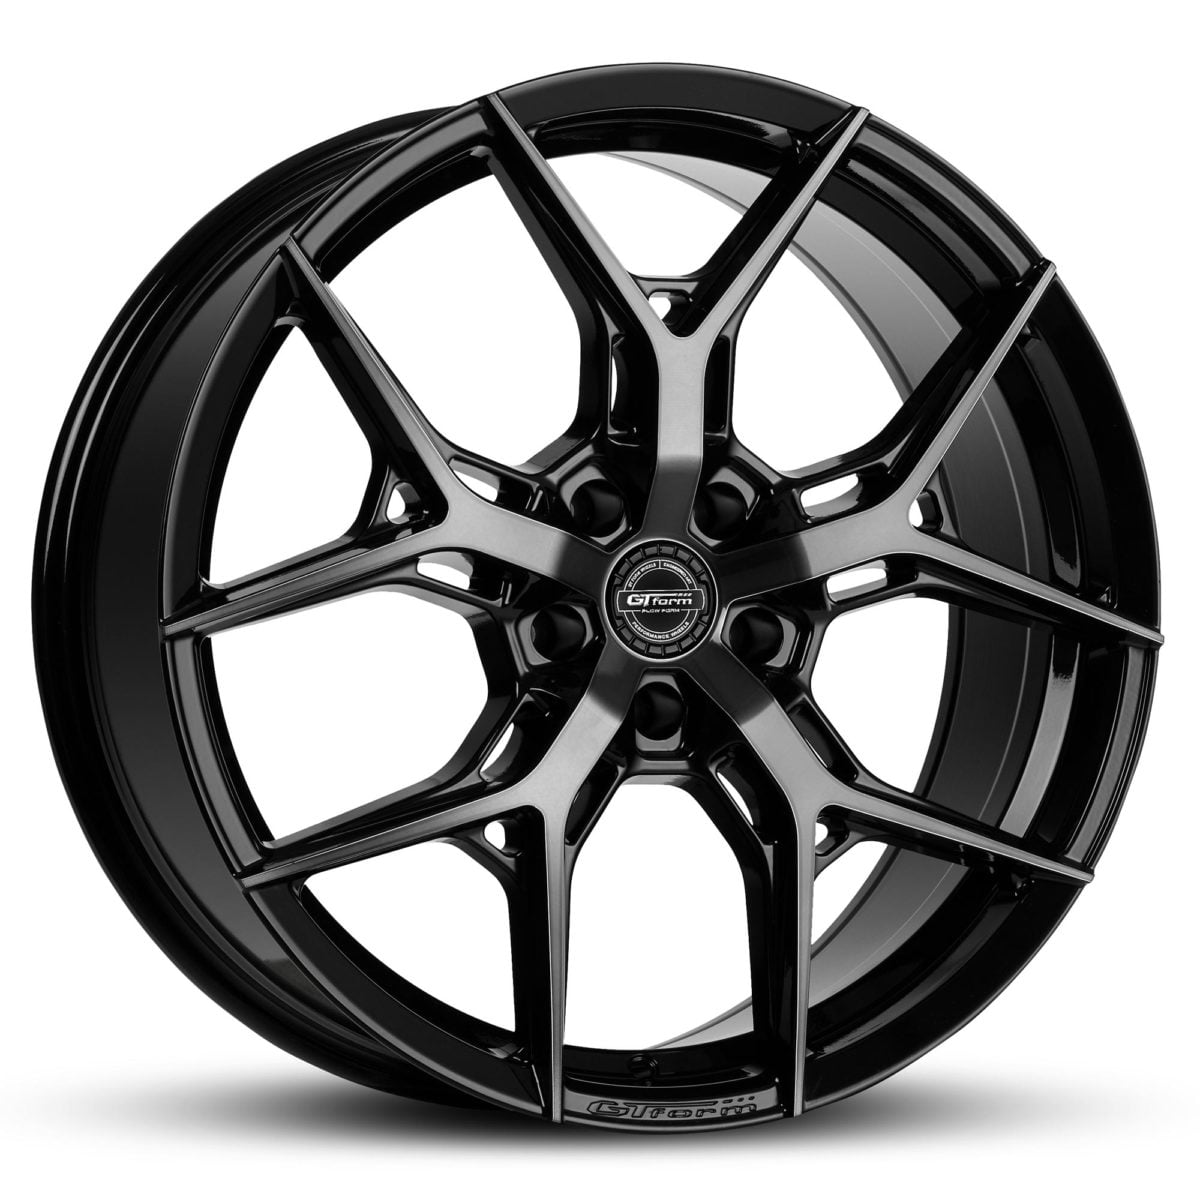 GT Form Torque gloss black tinted wheels performance rims